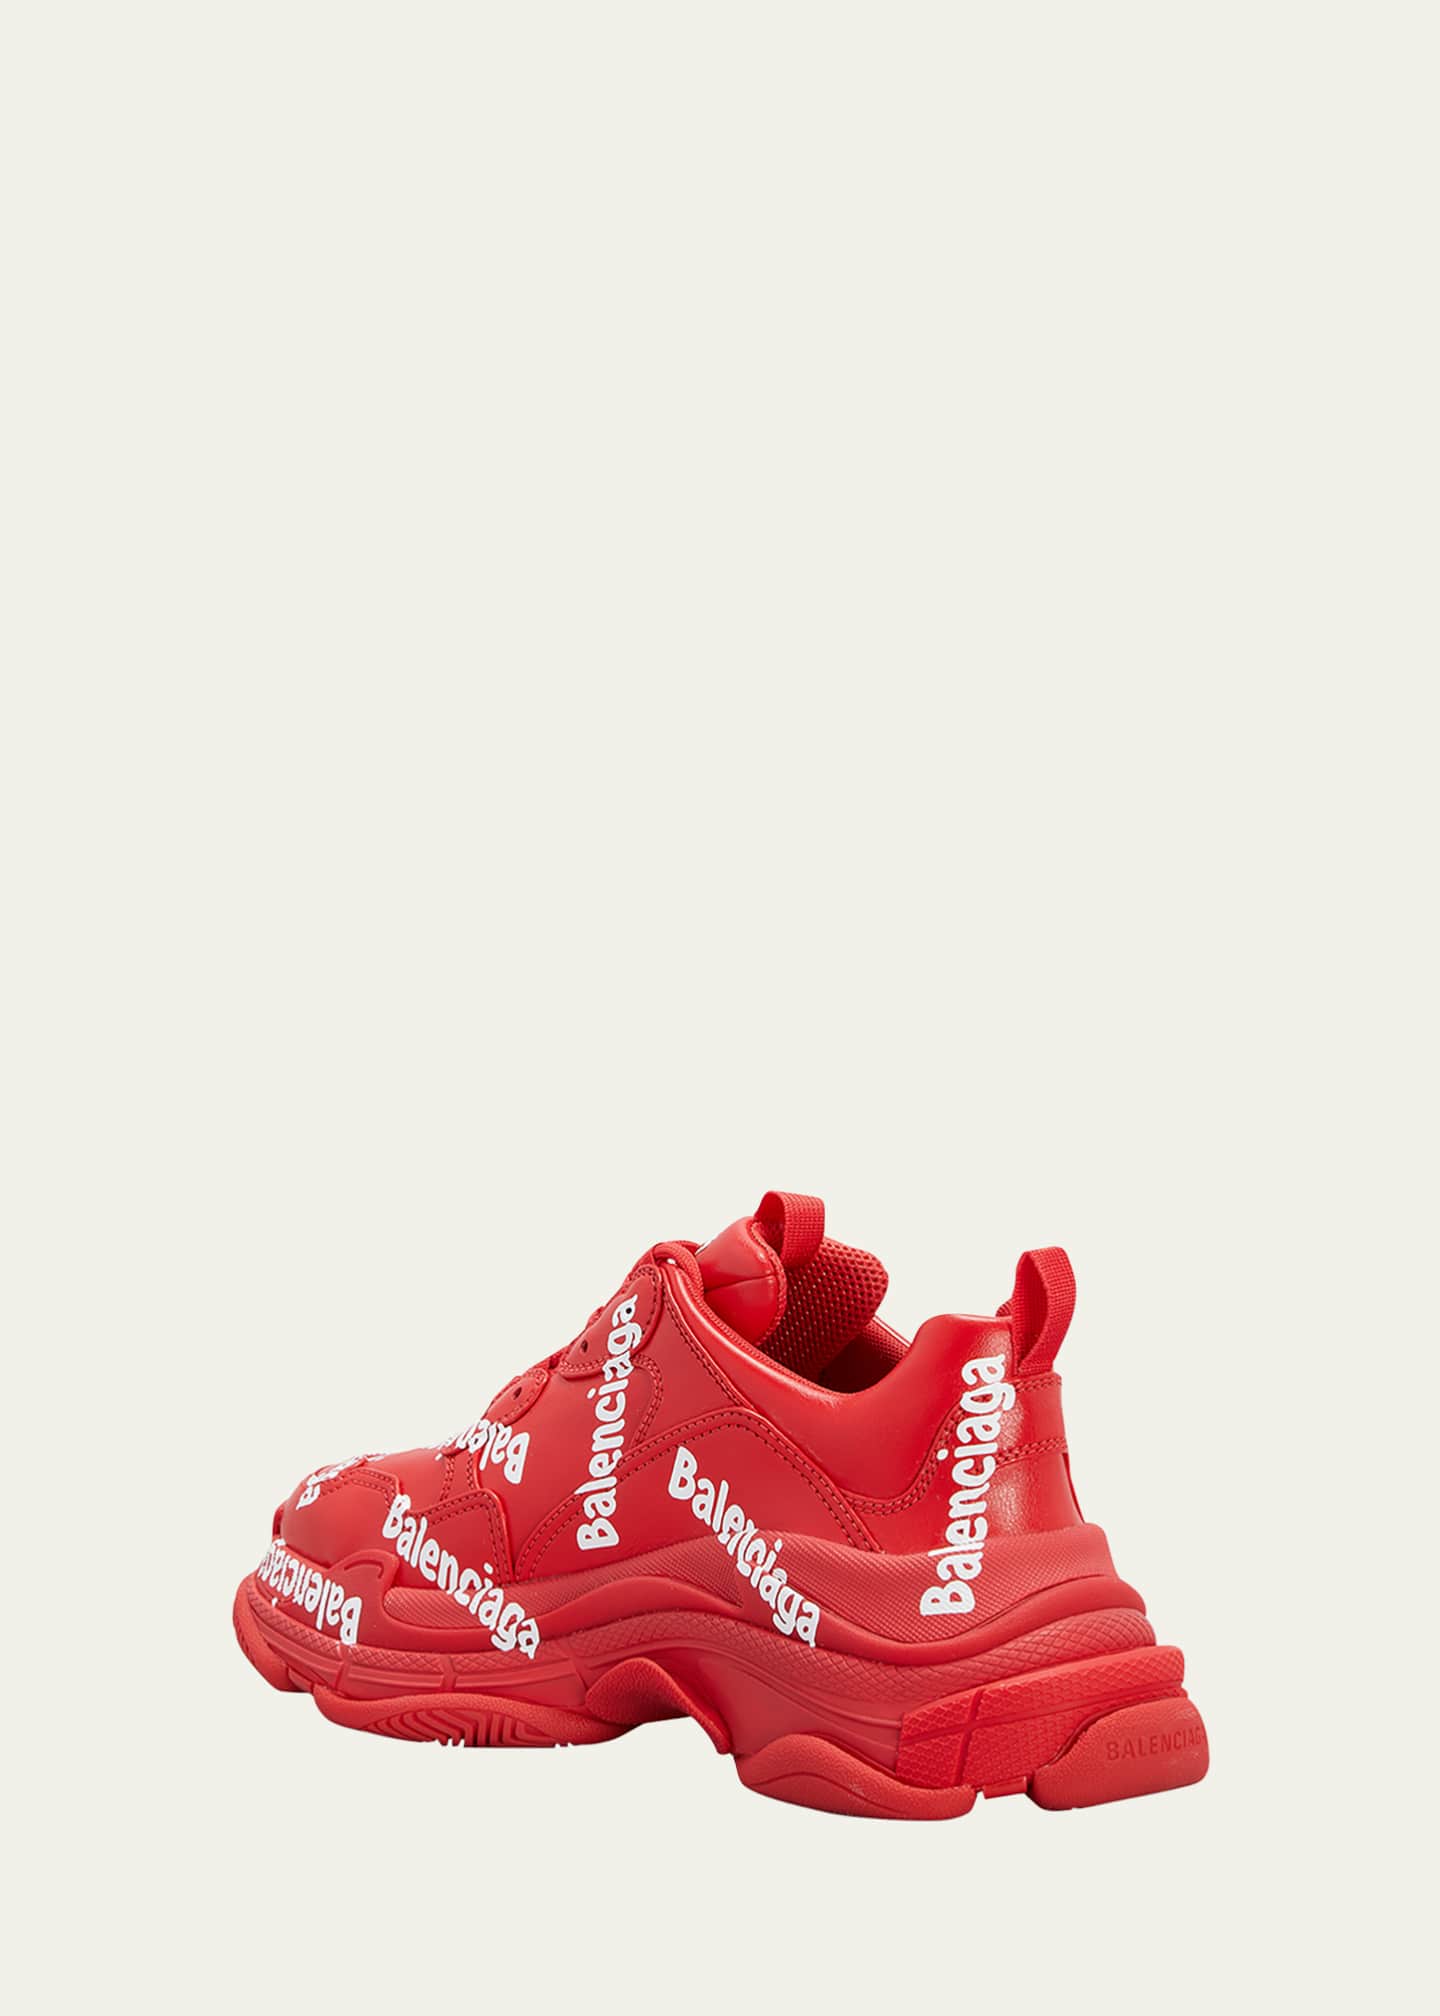 Red Balenciaga Triple S Shoes